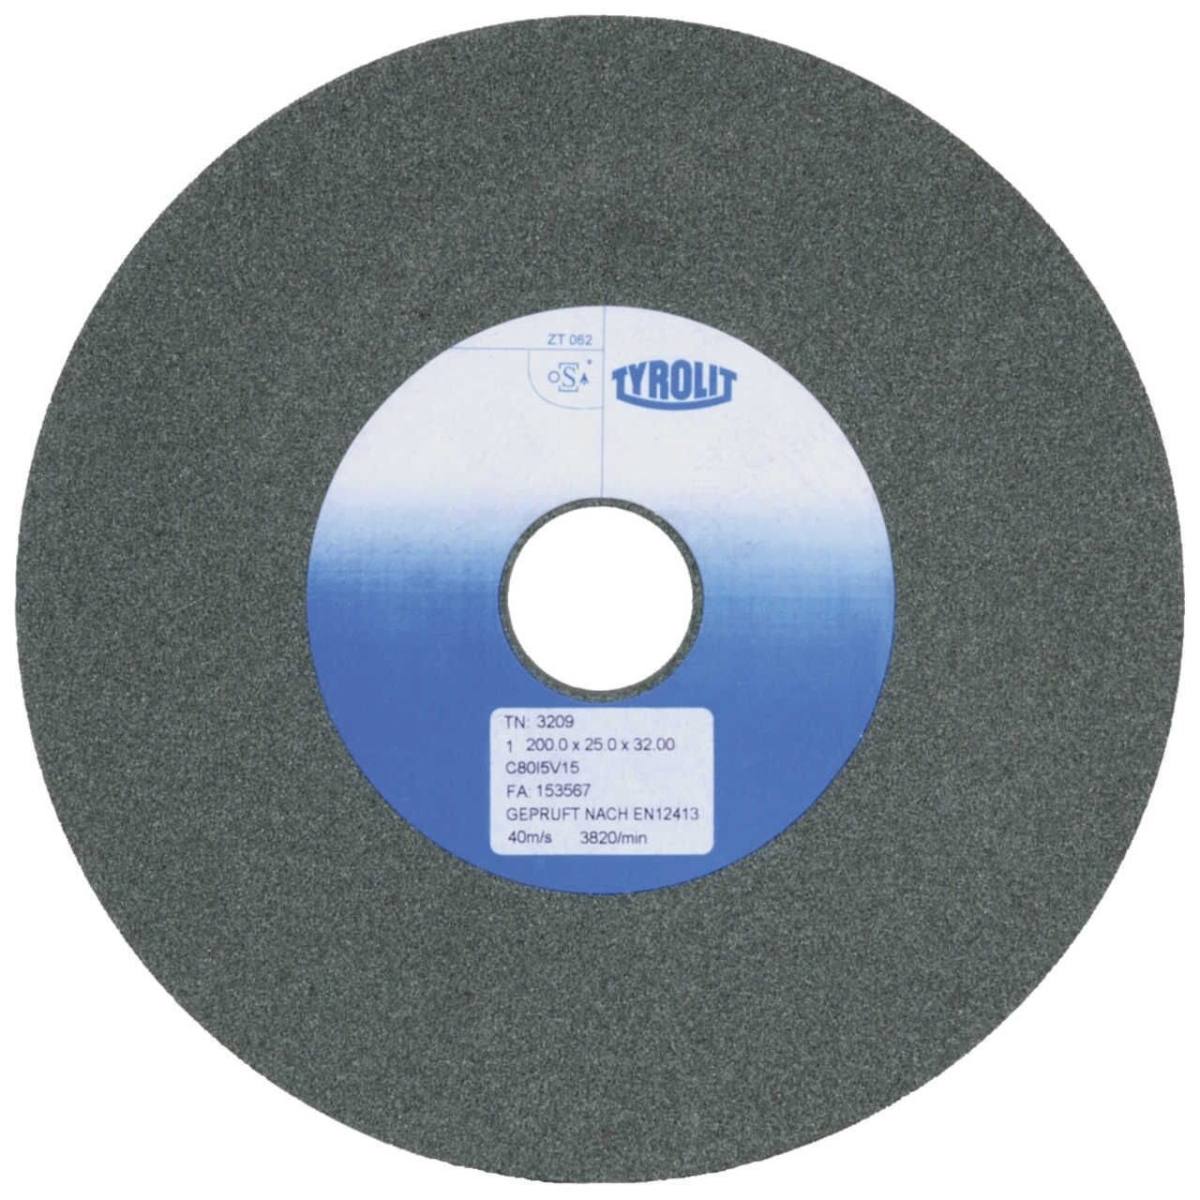 TYROLIT discos de desbaste cerámicos convencionales DxDxH 200x20x32 Para metales no férricos, forma: 1, Art. 34287488